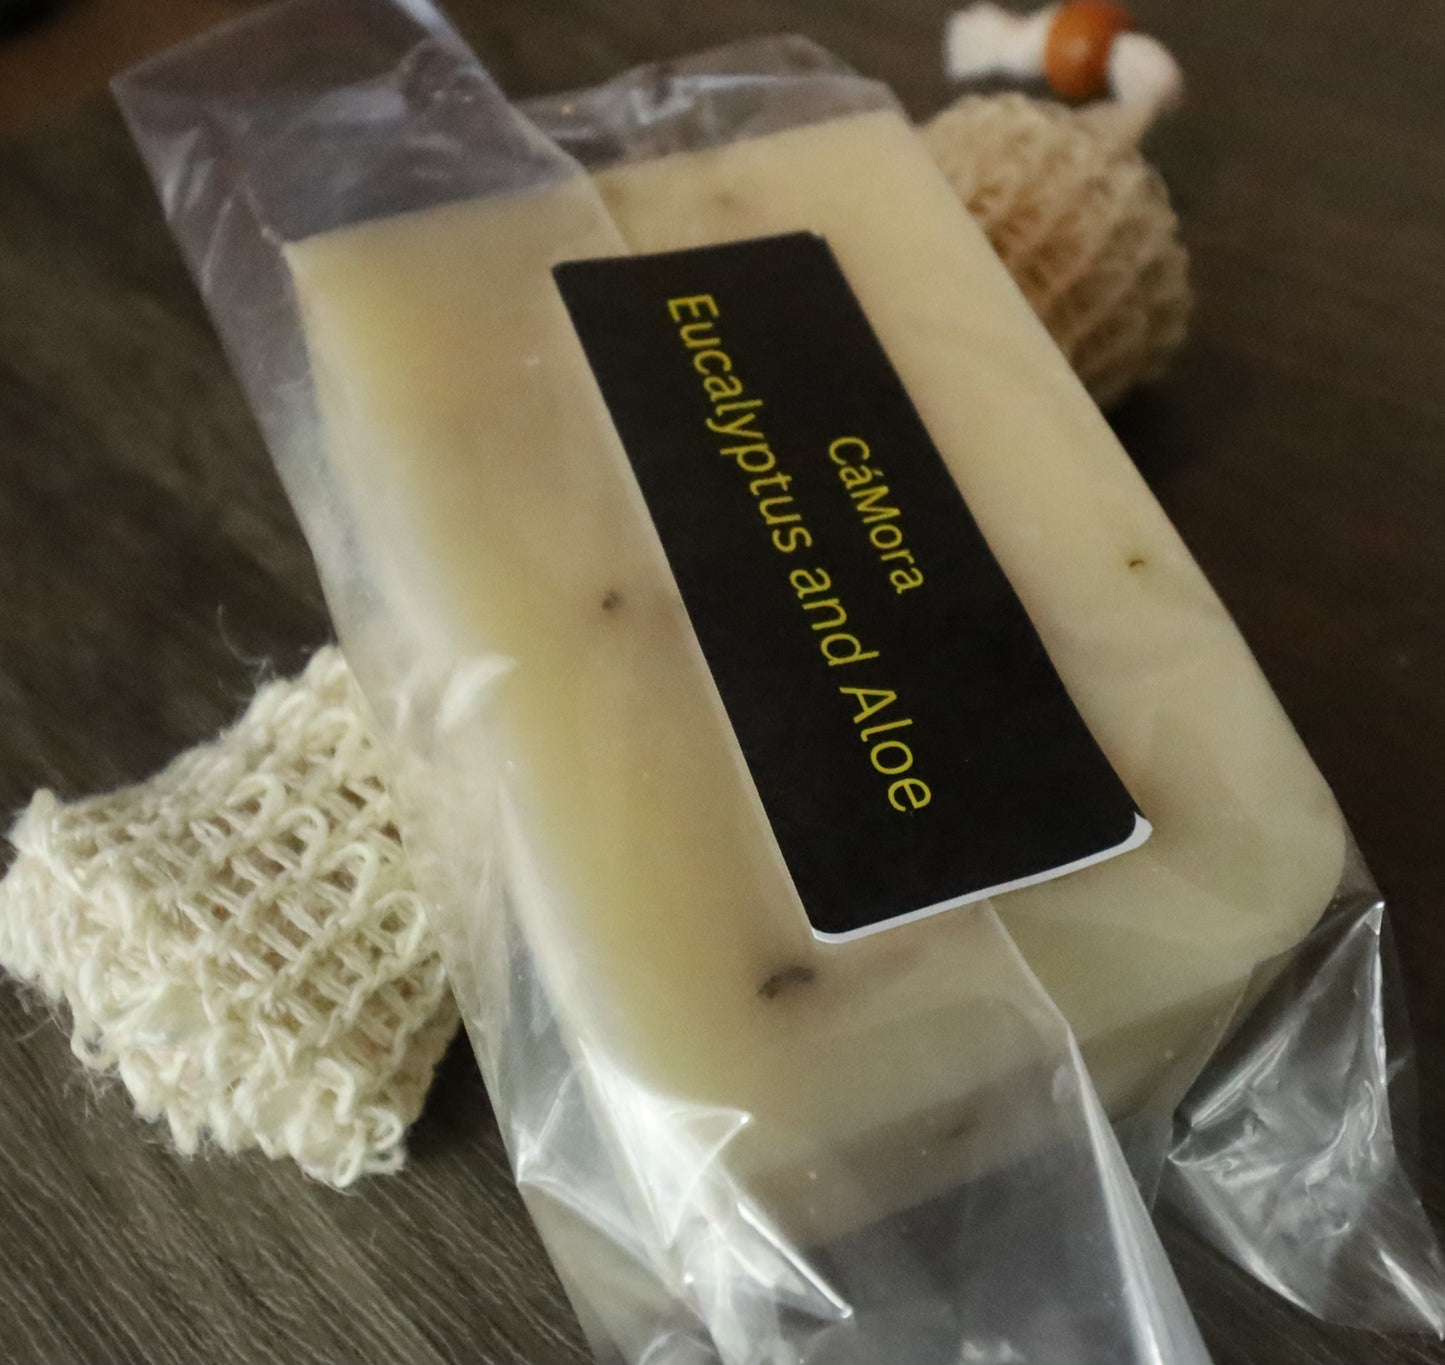 Ca'Mora eucalyptus aloe shea butter soap labeled with soap saver.